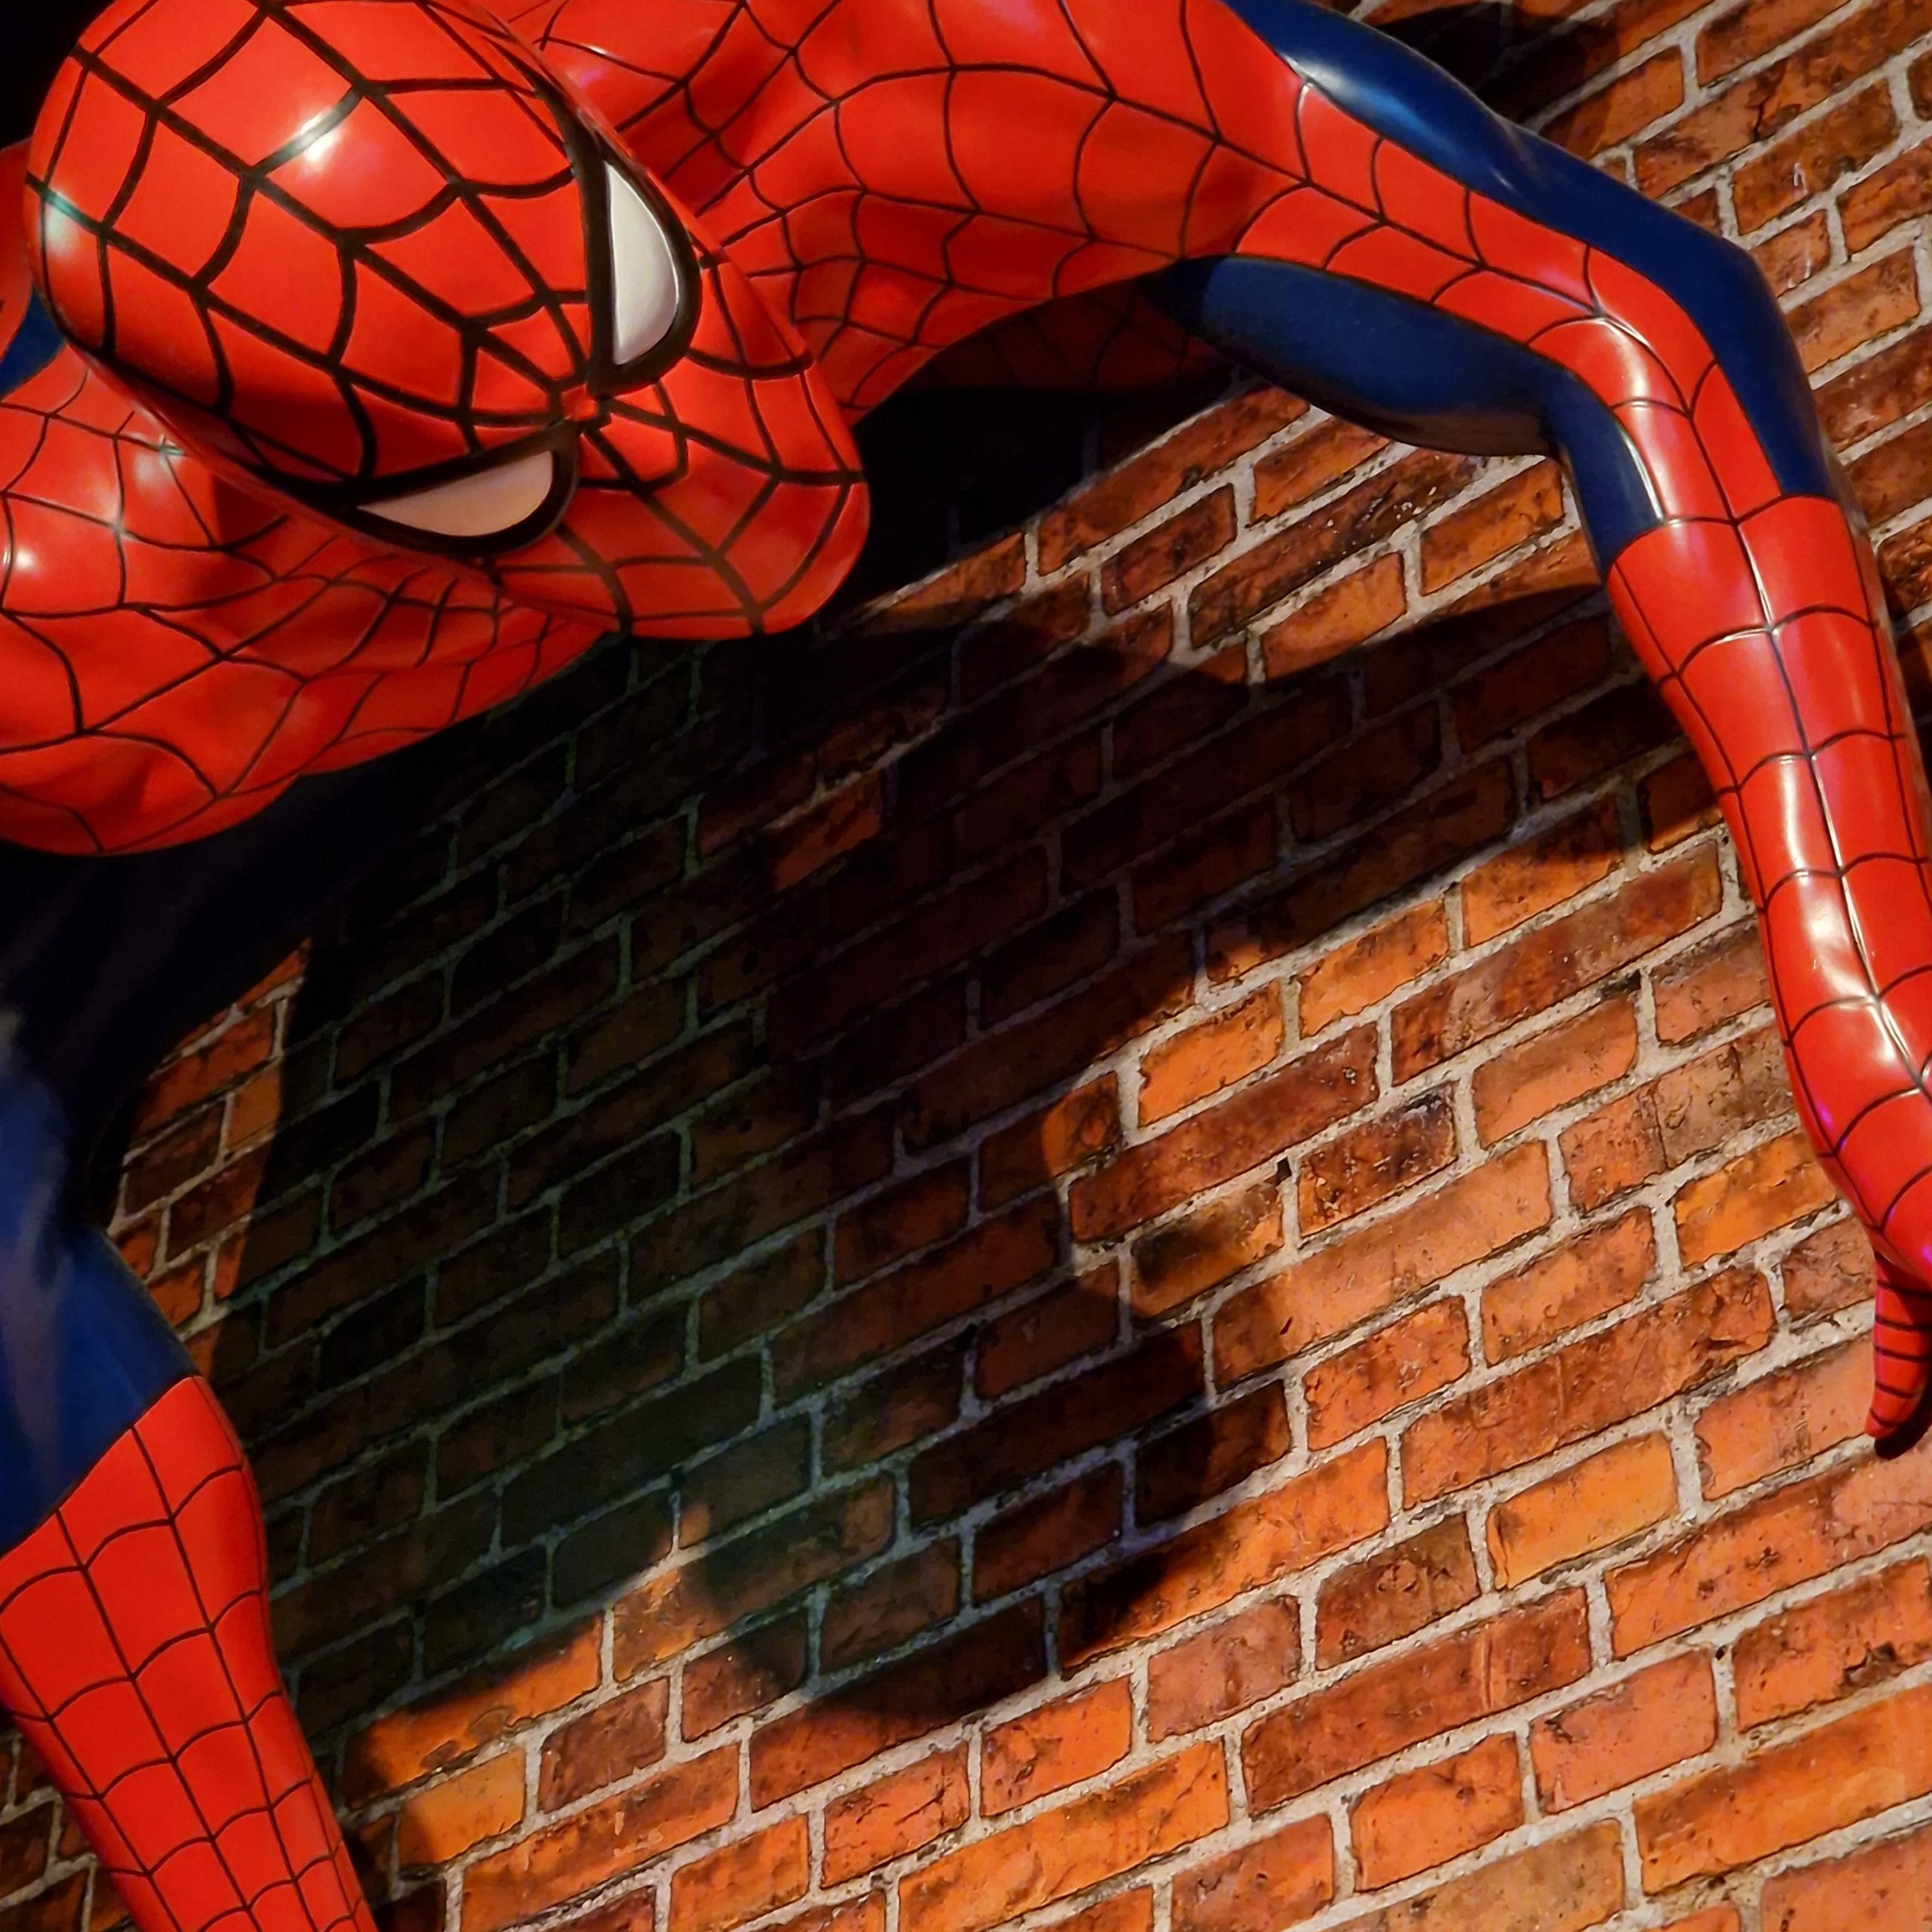 Spider-Man (Madame Tussauds aprile 2022)